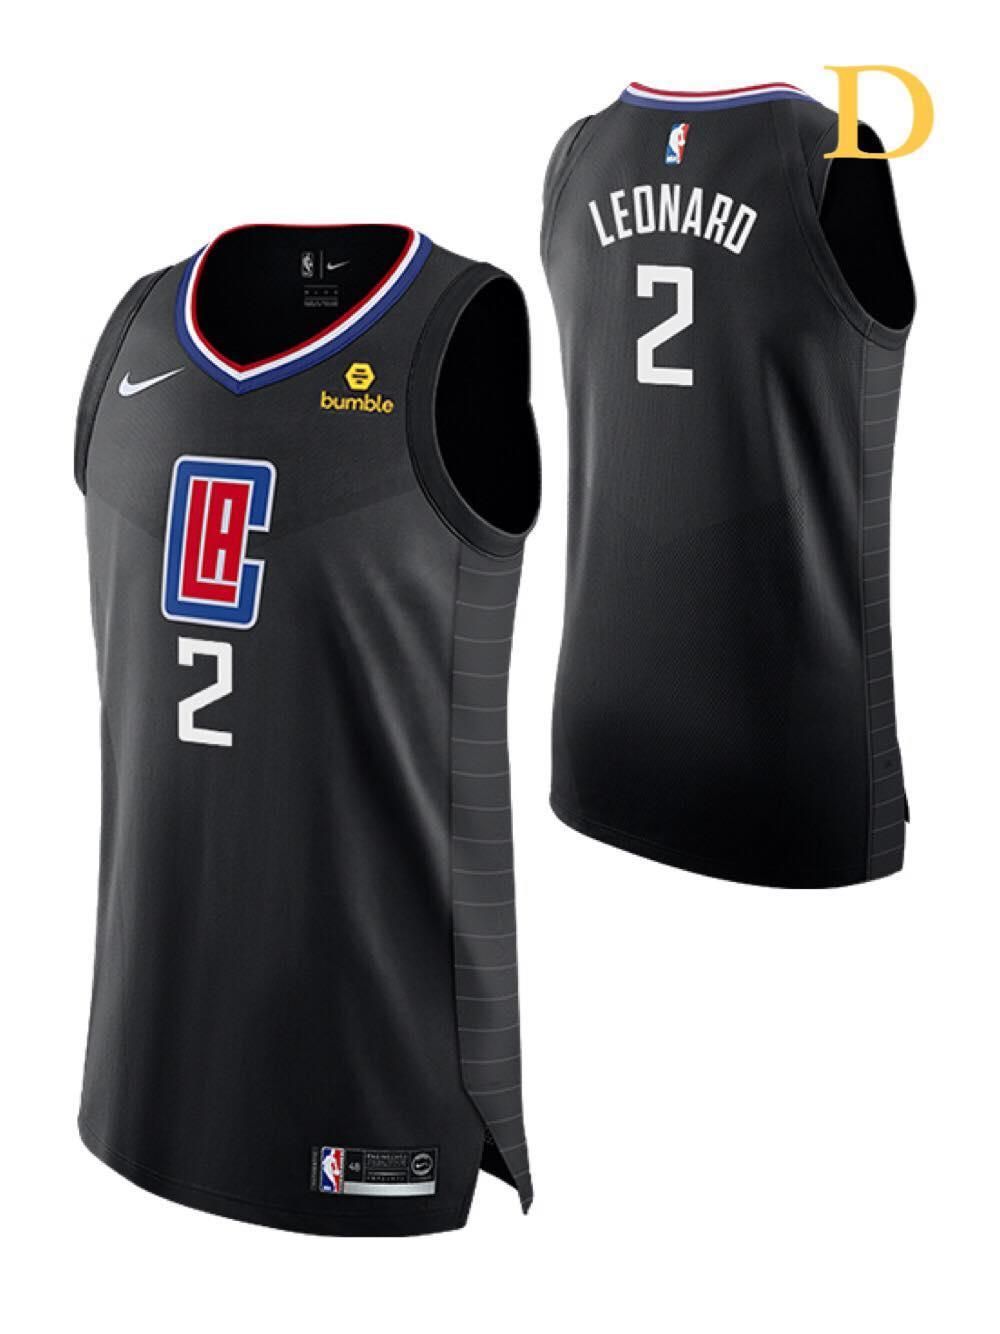 leonard basketball jersey